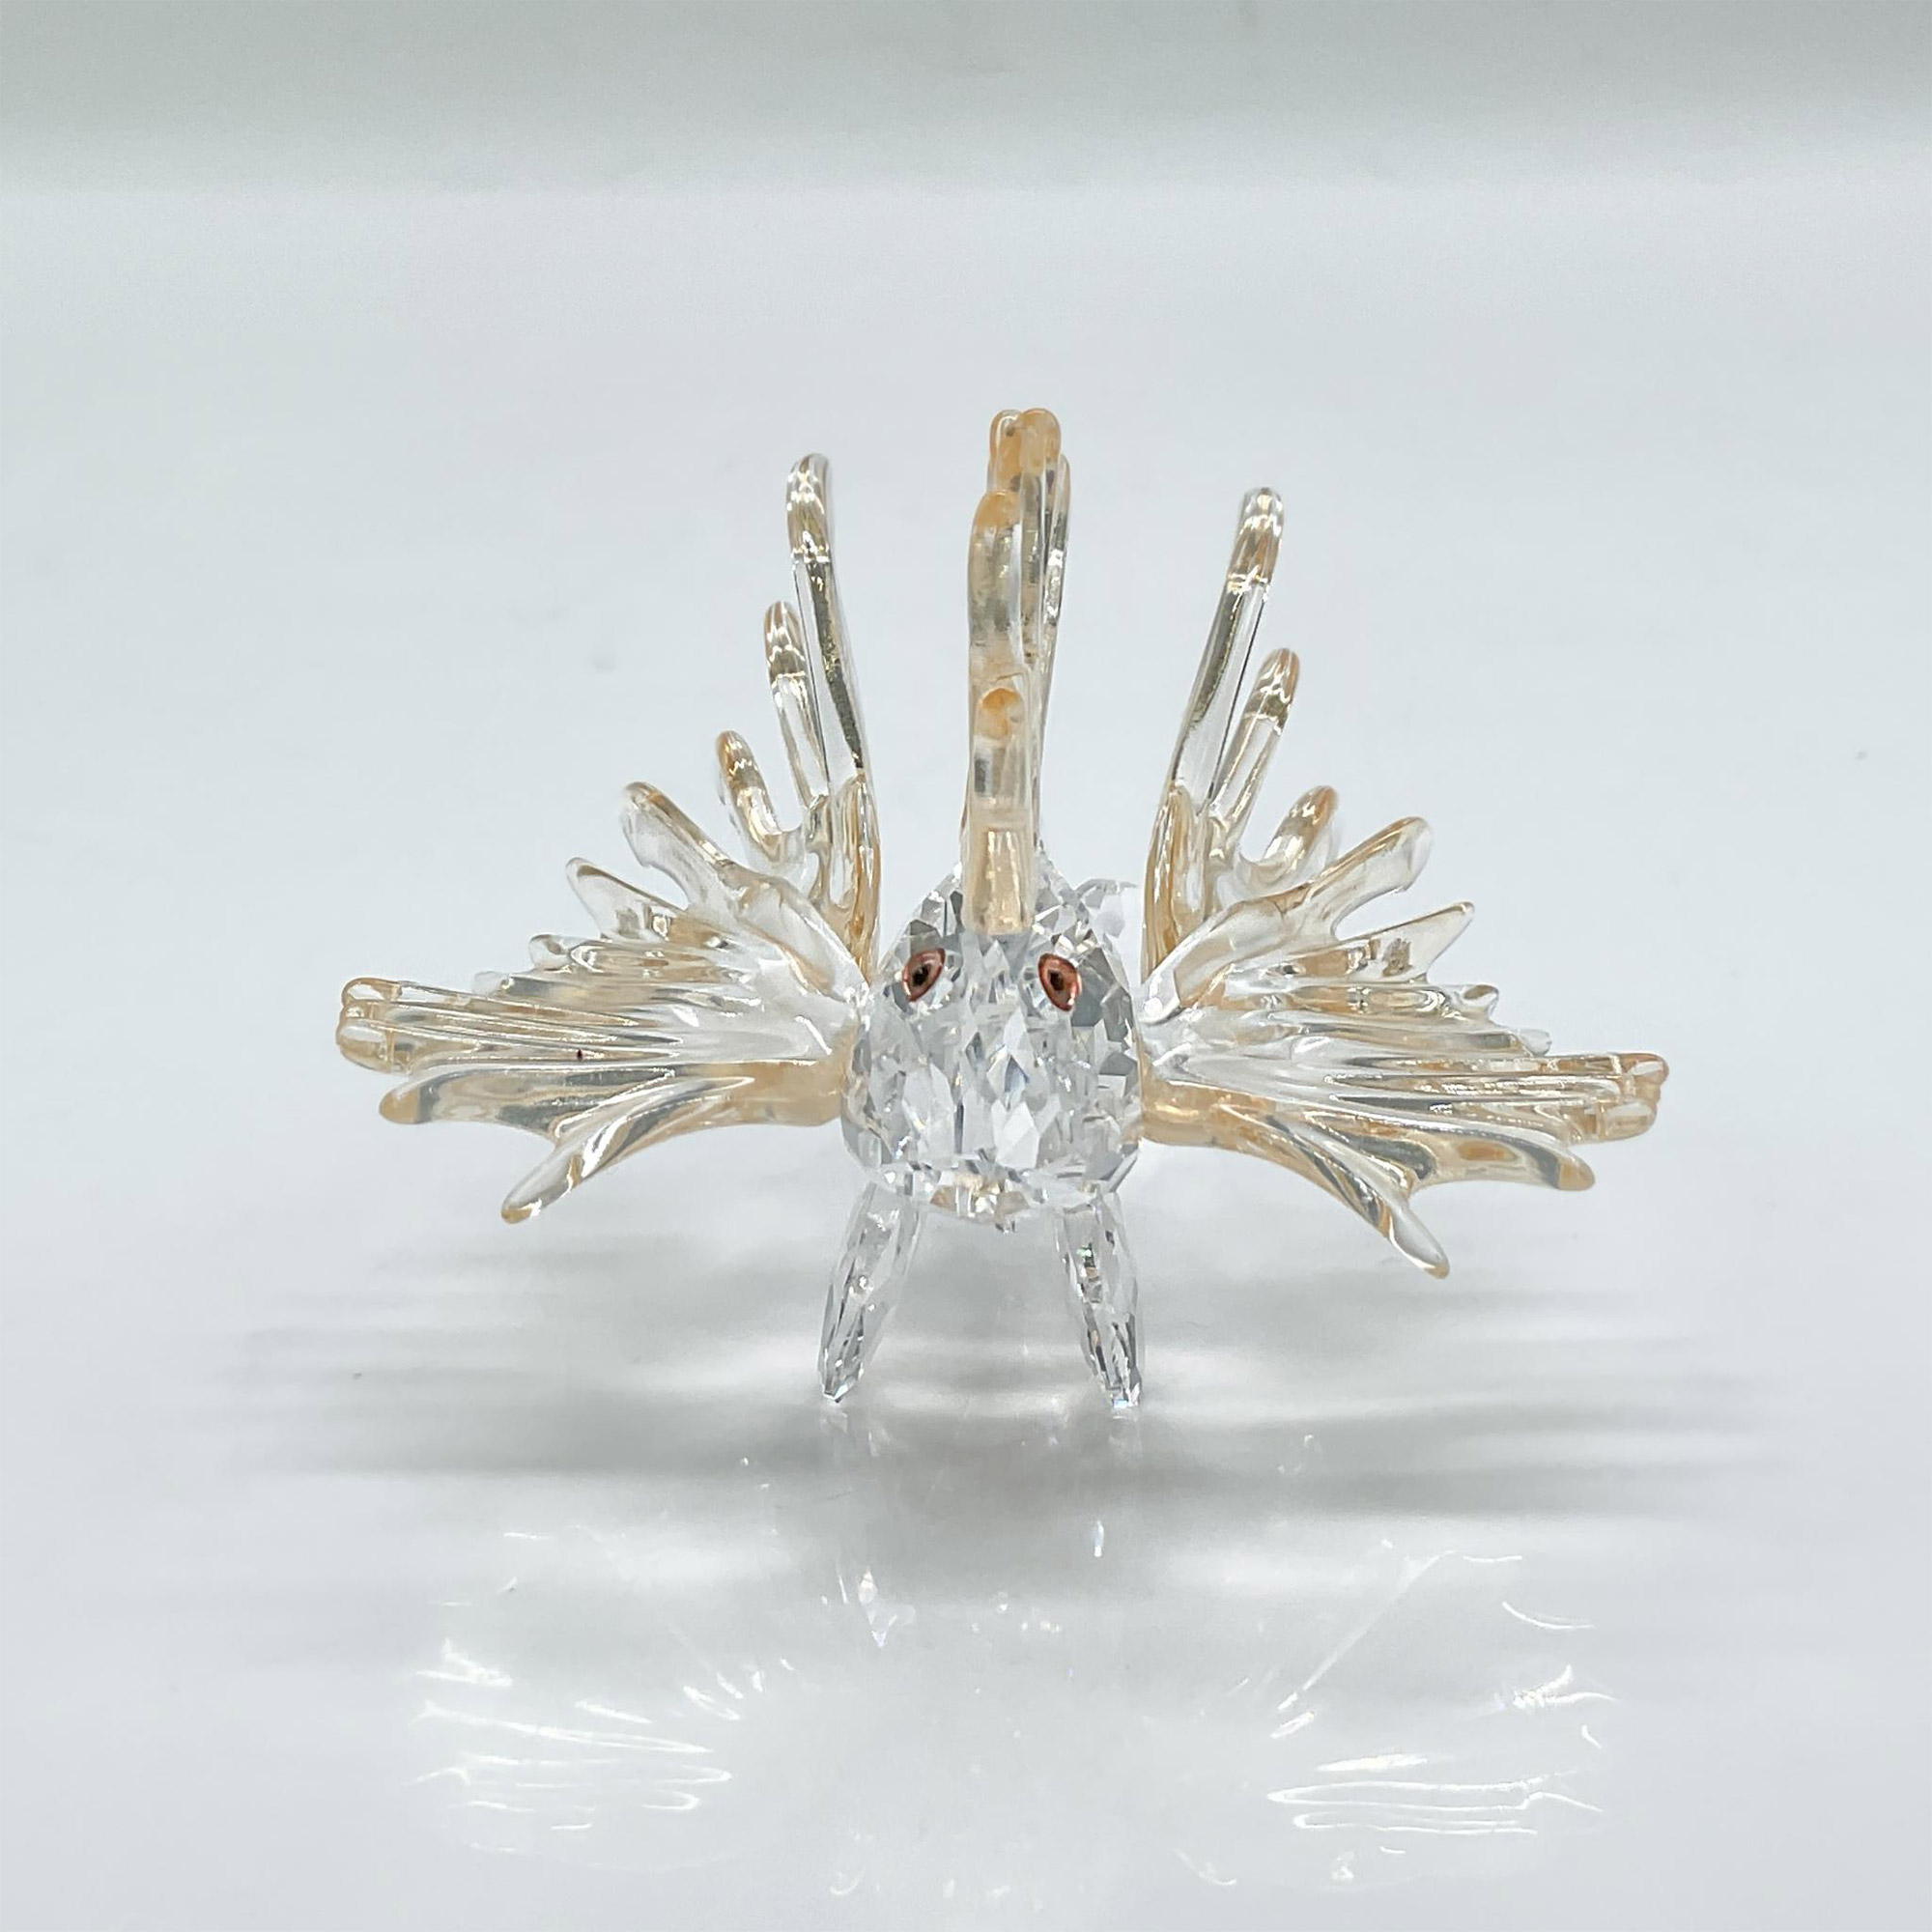 Swarovski Crystal Figurine, Lion Fish - Image 3 of 5